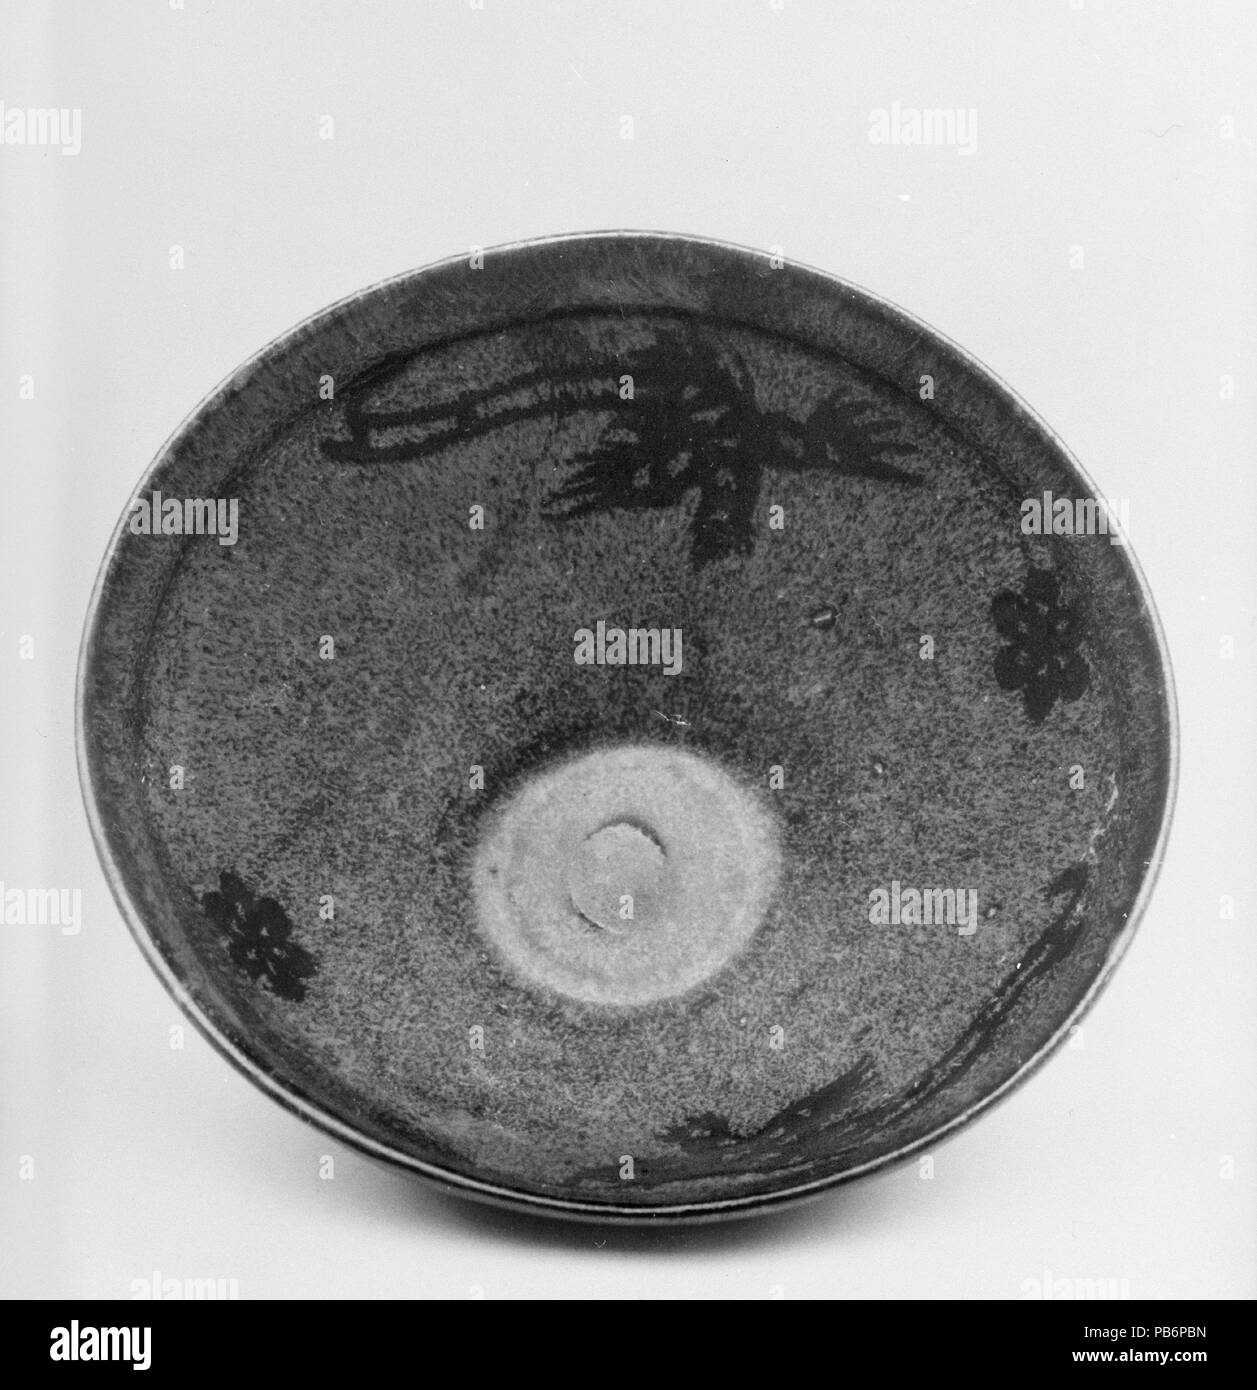 Schüssel. Kultur: China. Abmessungen: H.2 11/16 in. (6,8 cm); Durchm. 5 1/16-in. (12,9 cm). Museum: Metropolitan Museum of Art, New York, USA. Stockfoto